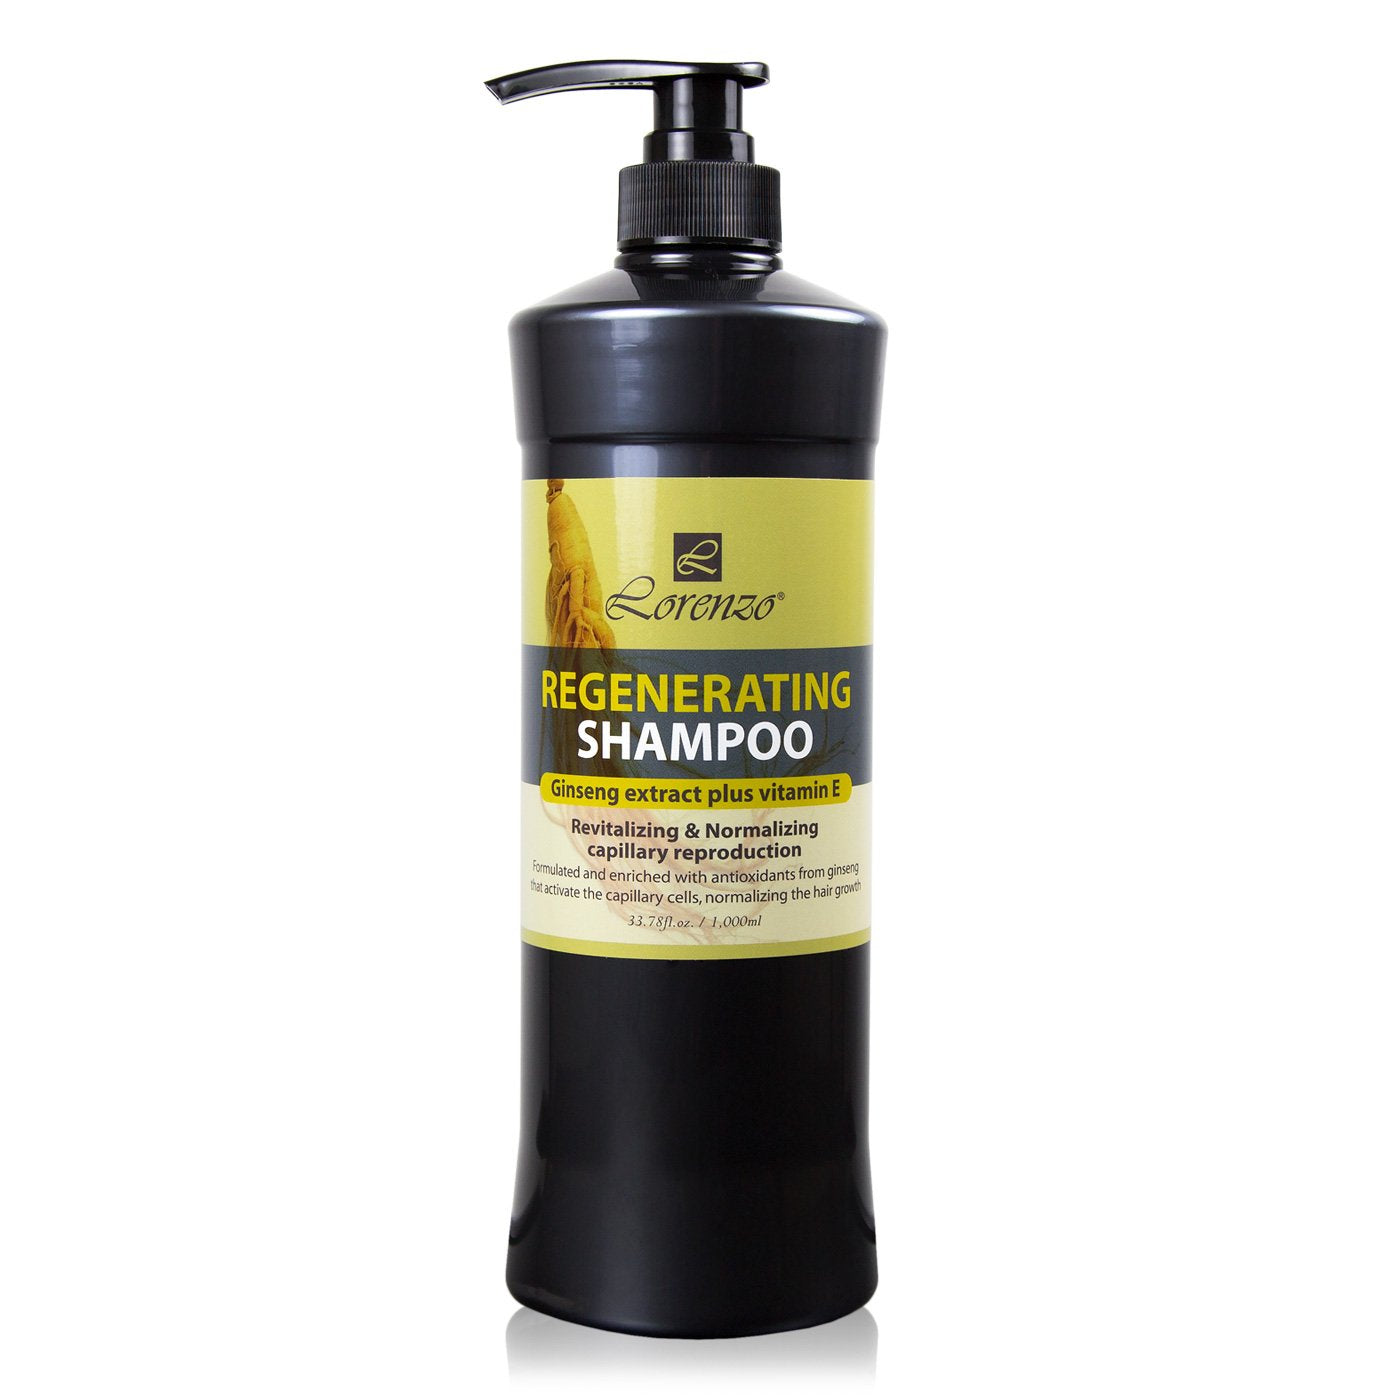 Lorenzo Regenerating Shampoo for Hair Growth, Ginseng Extract Plus Vitamin E, 33.78oz